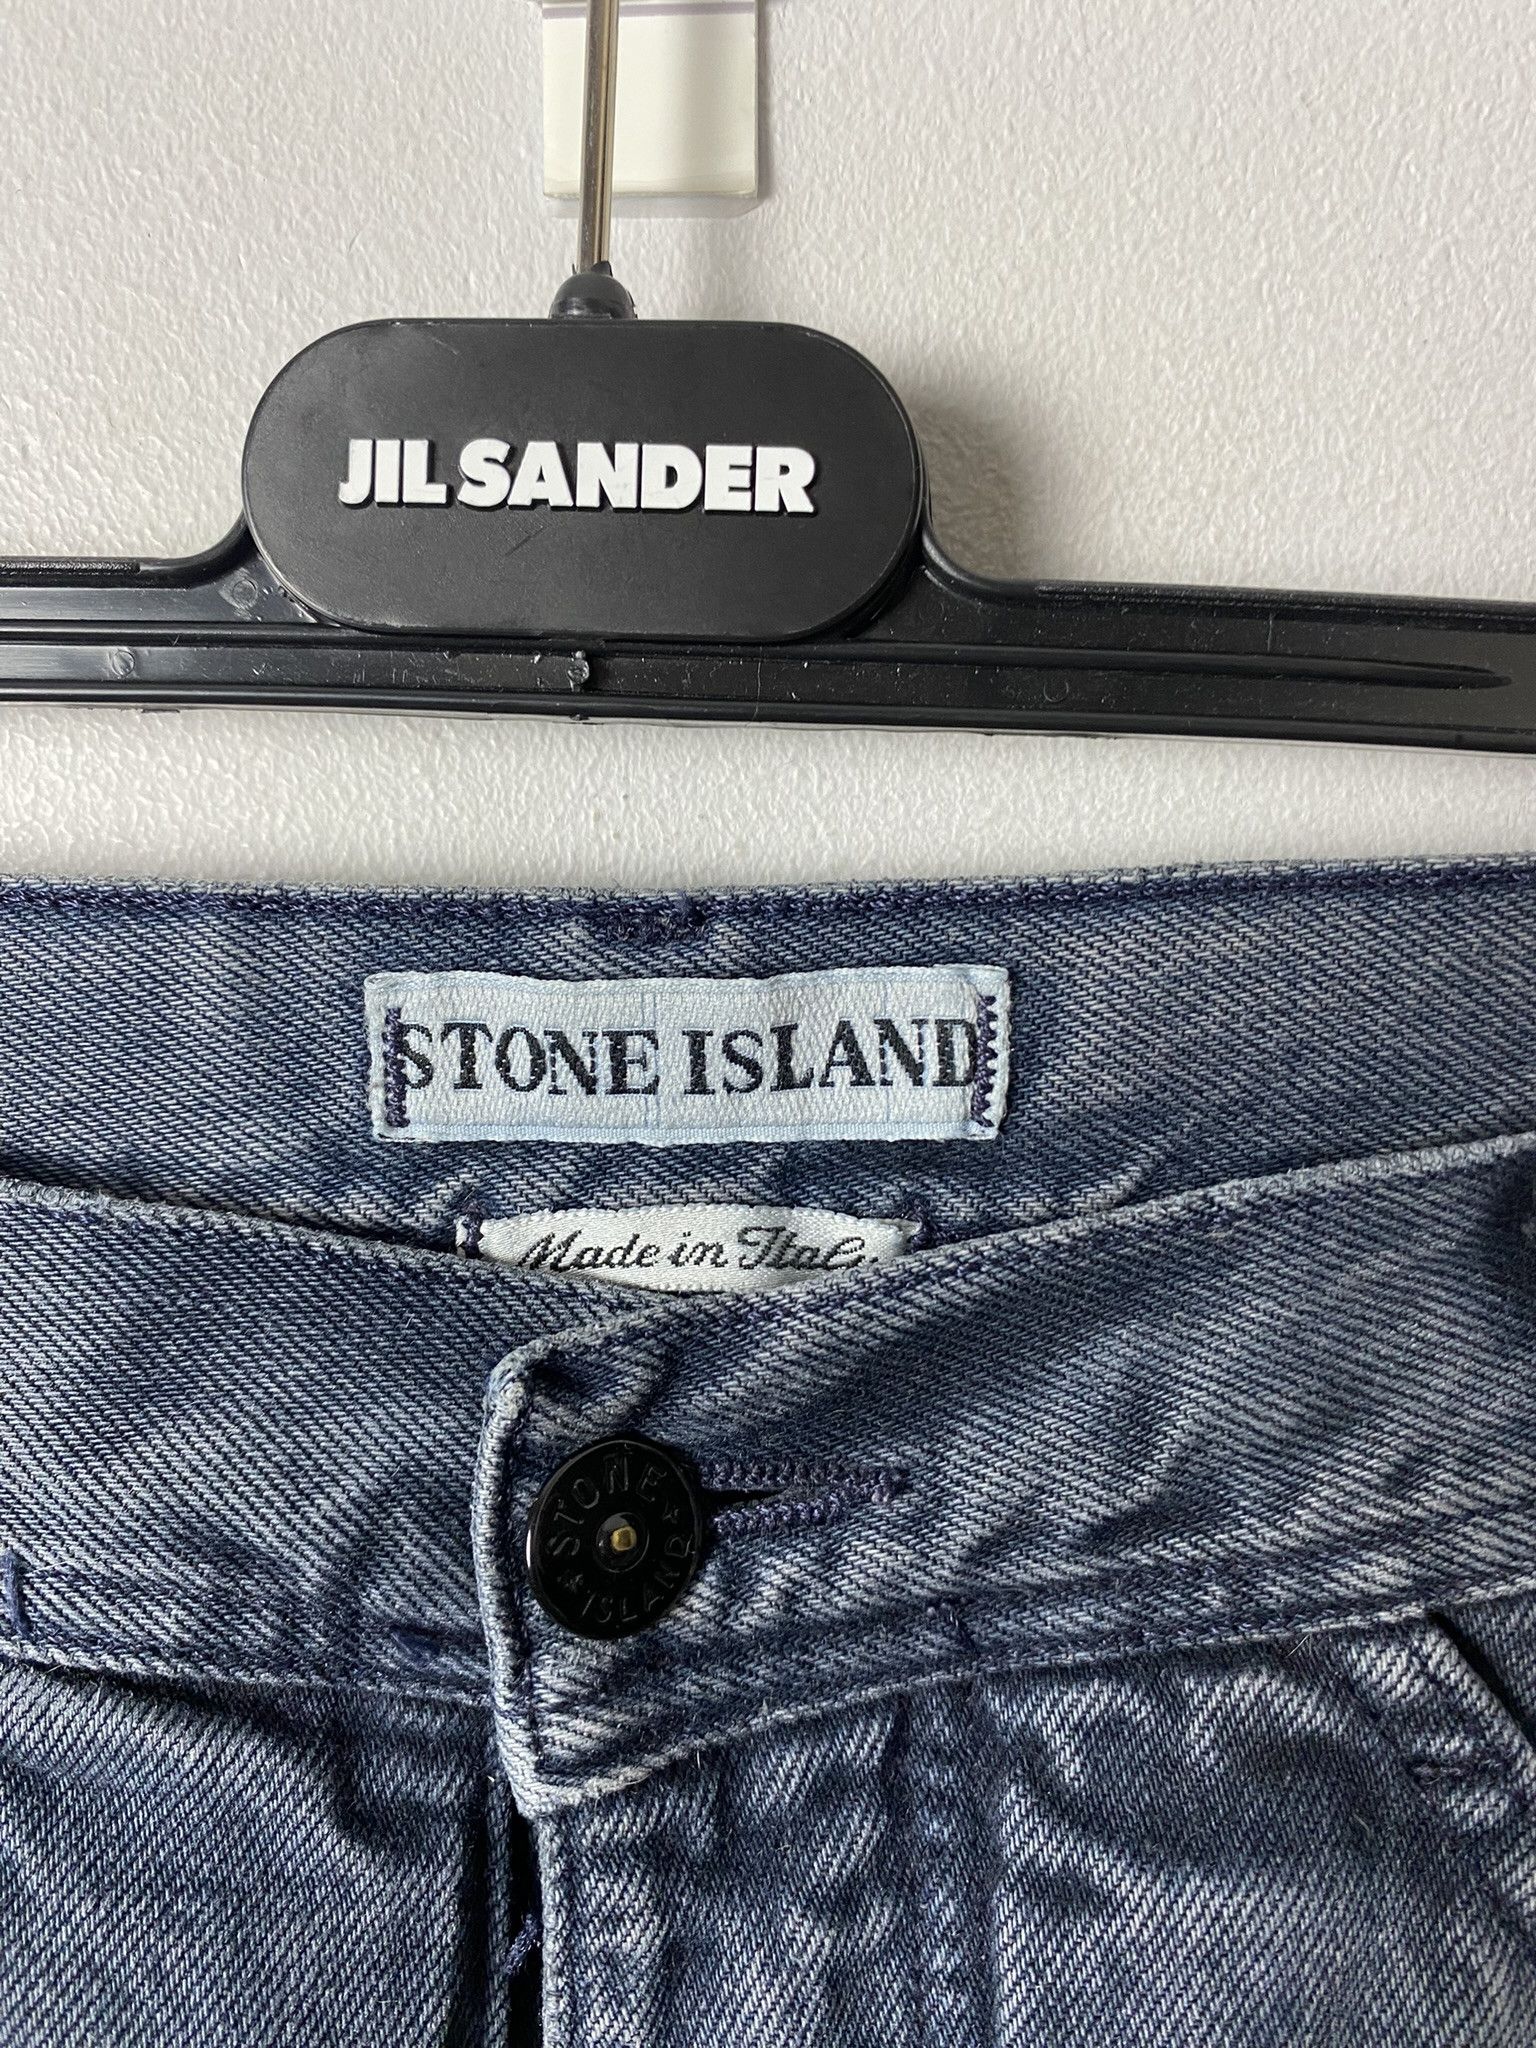 Stone Island Stone Island vintage 80s 90s denim jeans pants patch logo Size US 28 / EU 44 - 3 Thumbnail